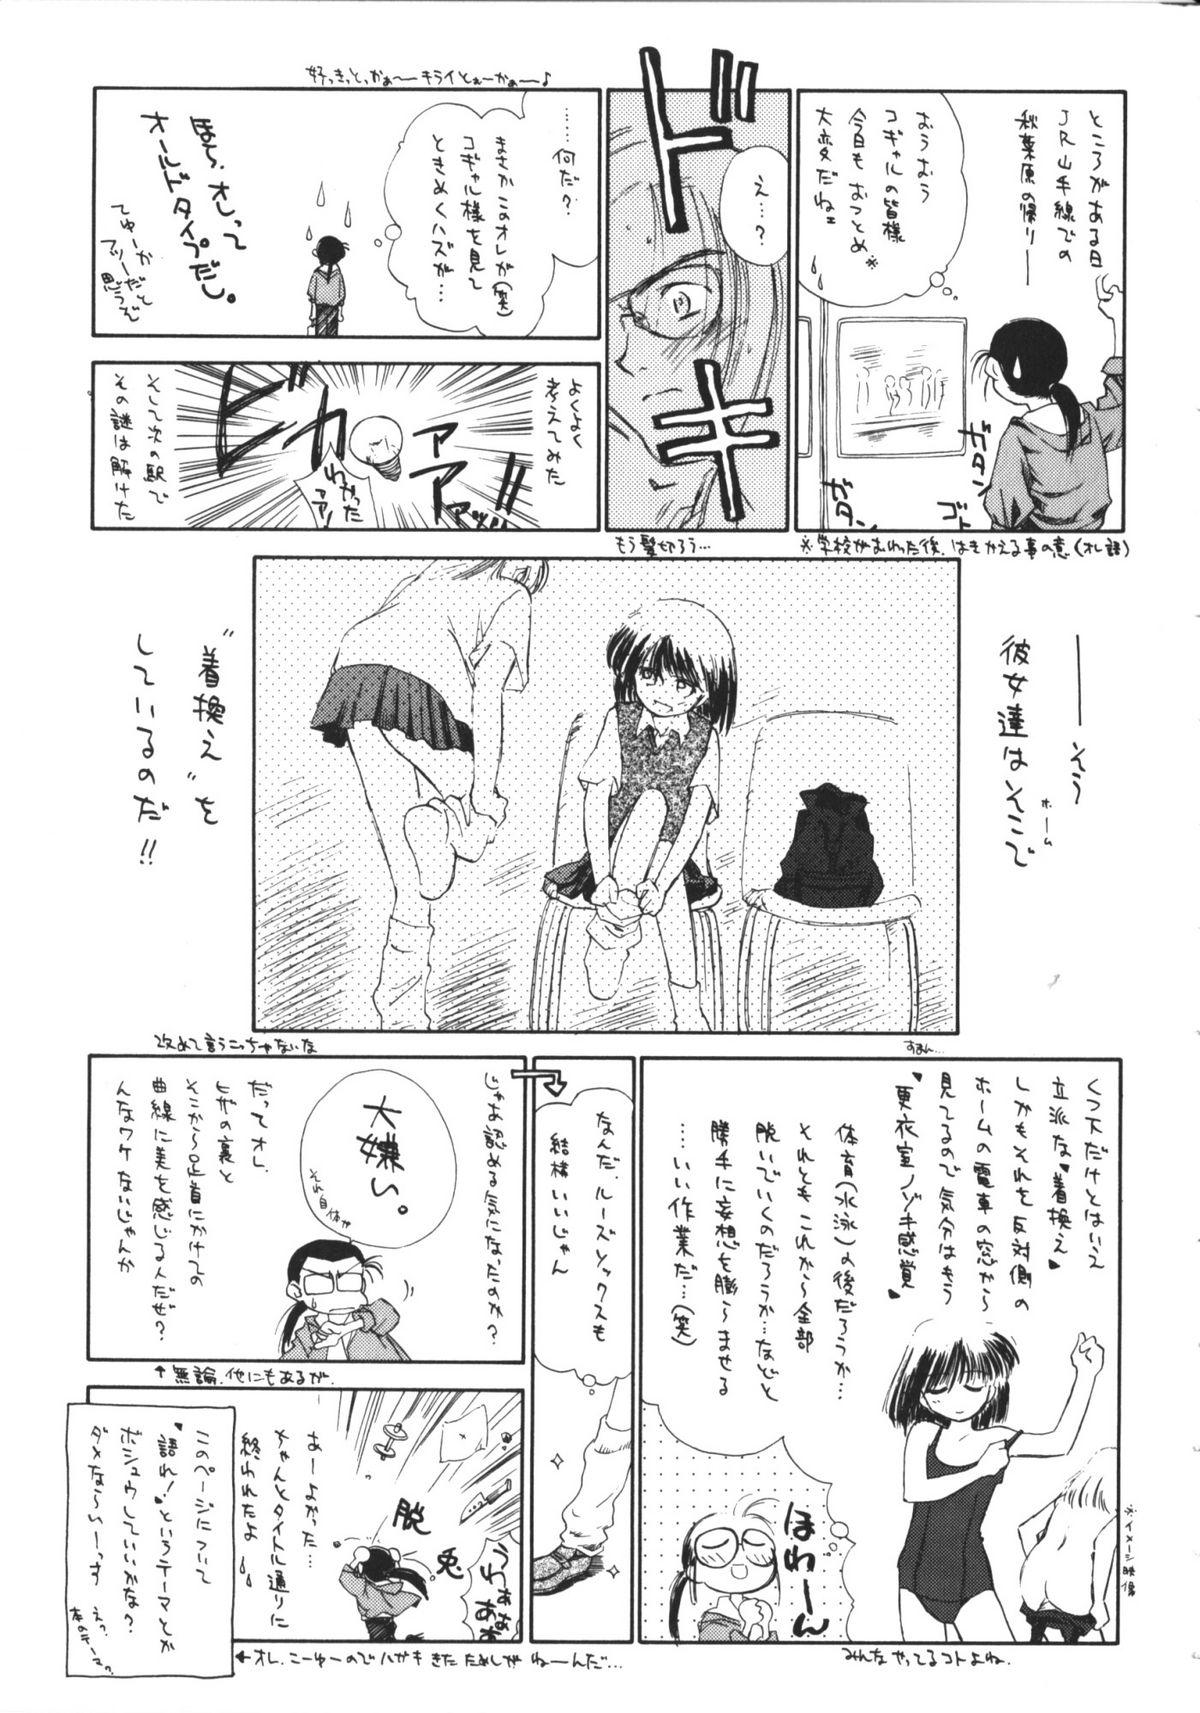 NAMI Joshikousei Anthology Vol. 1 - Yamato Nadeshiko Hen 157